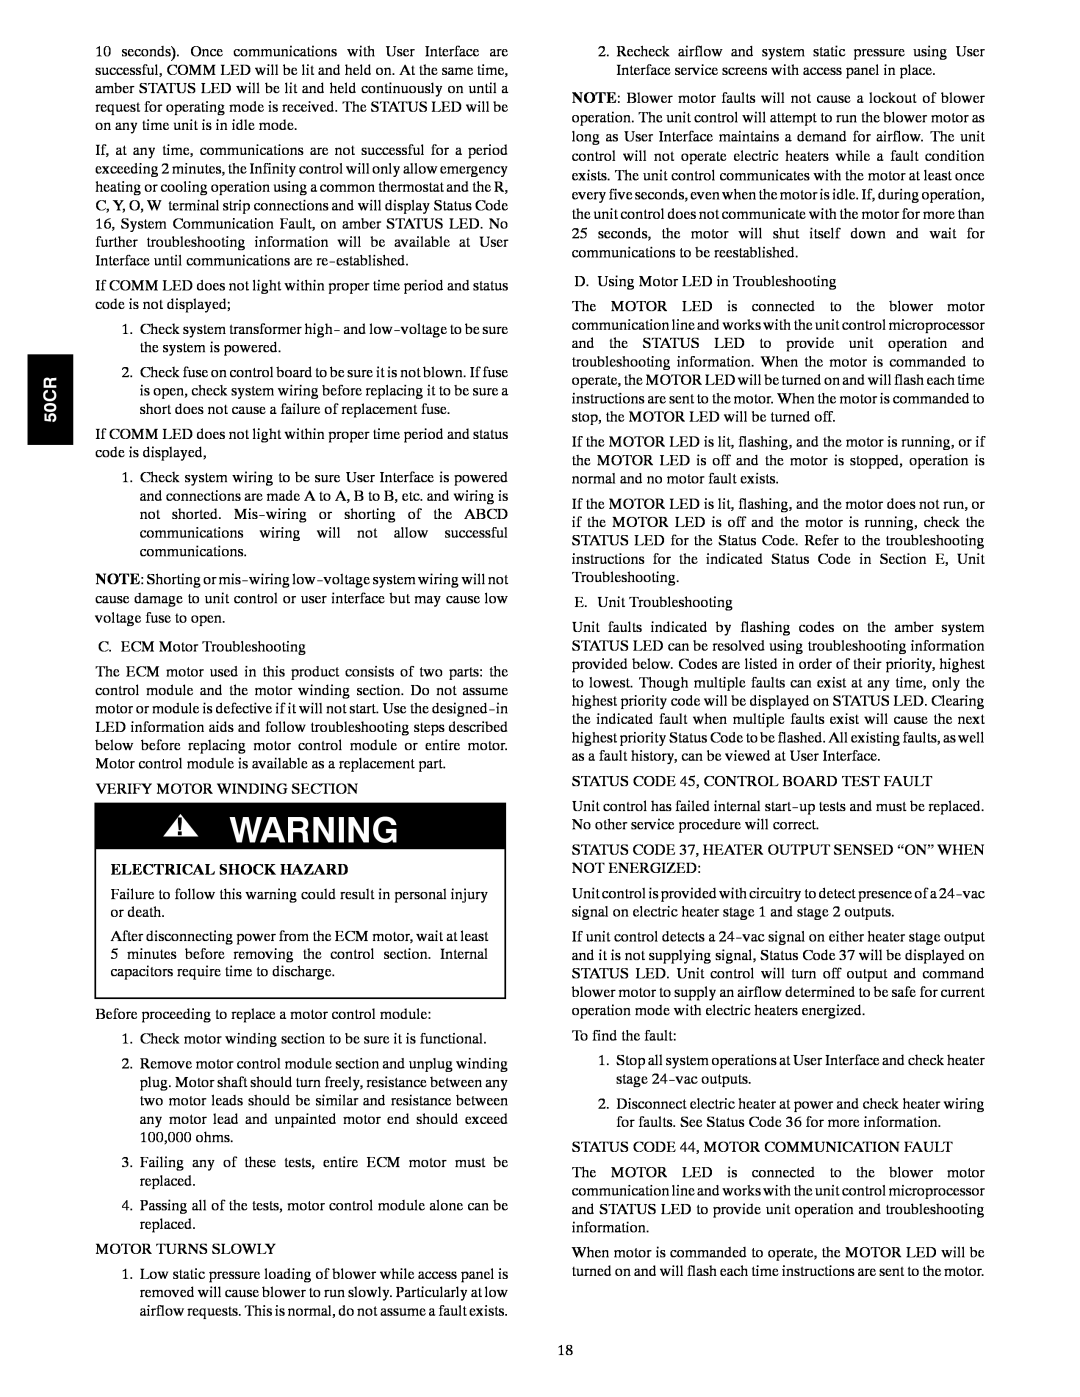 Carrier 50CR installation instructions C. ECM Motor Troubleshooting, Electrical Shock Hazard 